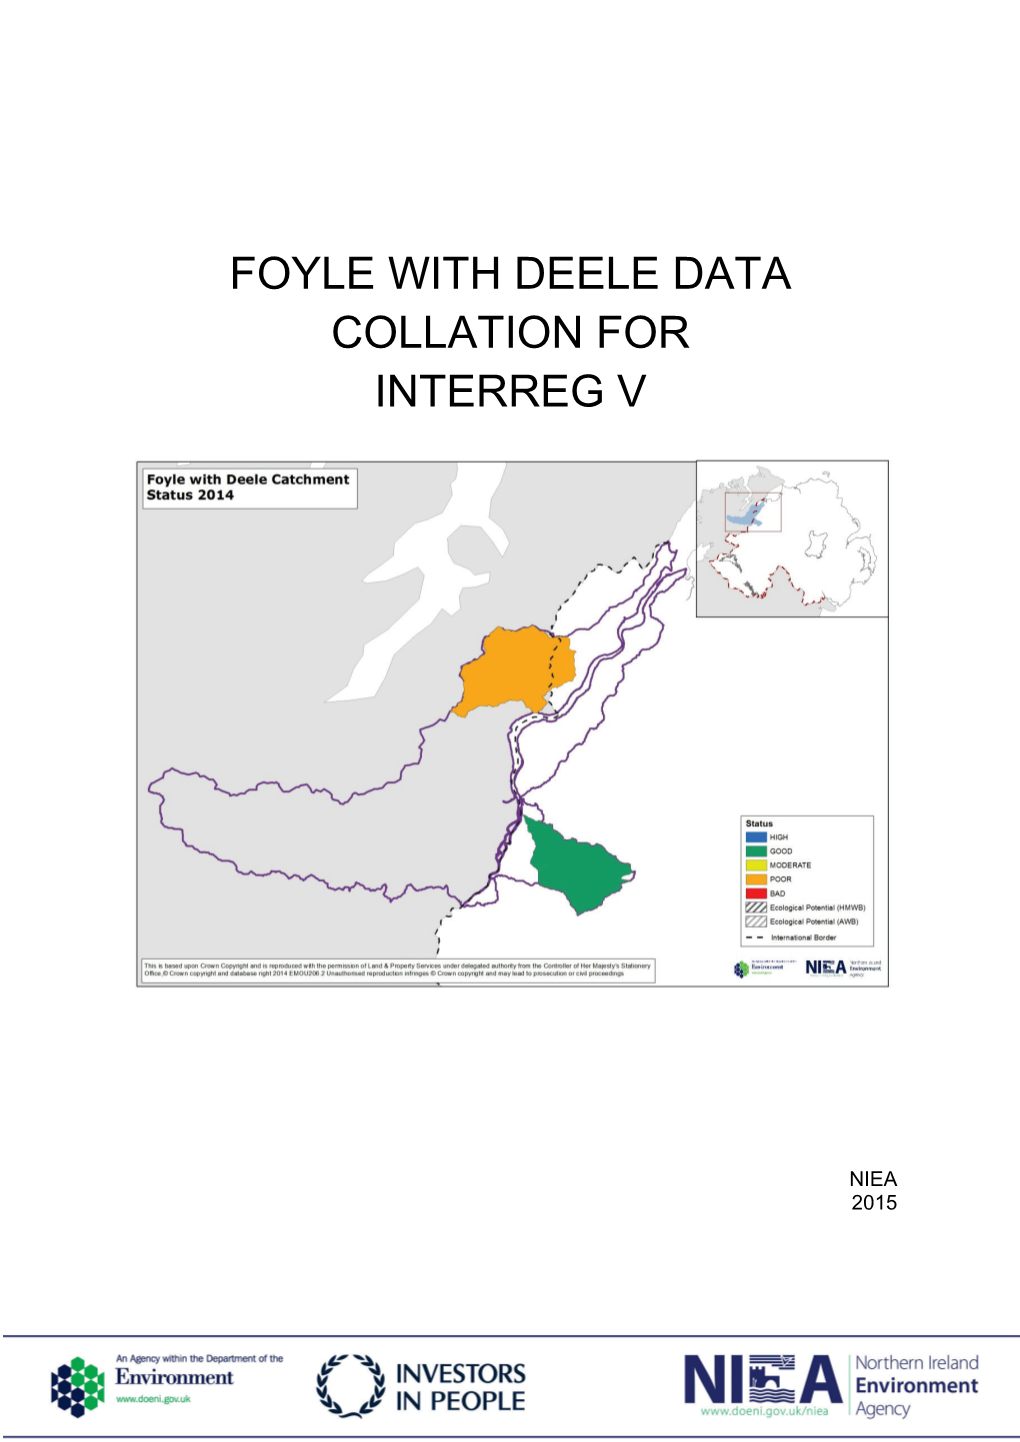 Foyle with Deele Data Collation for Interreg V